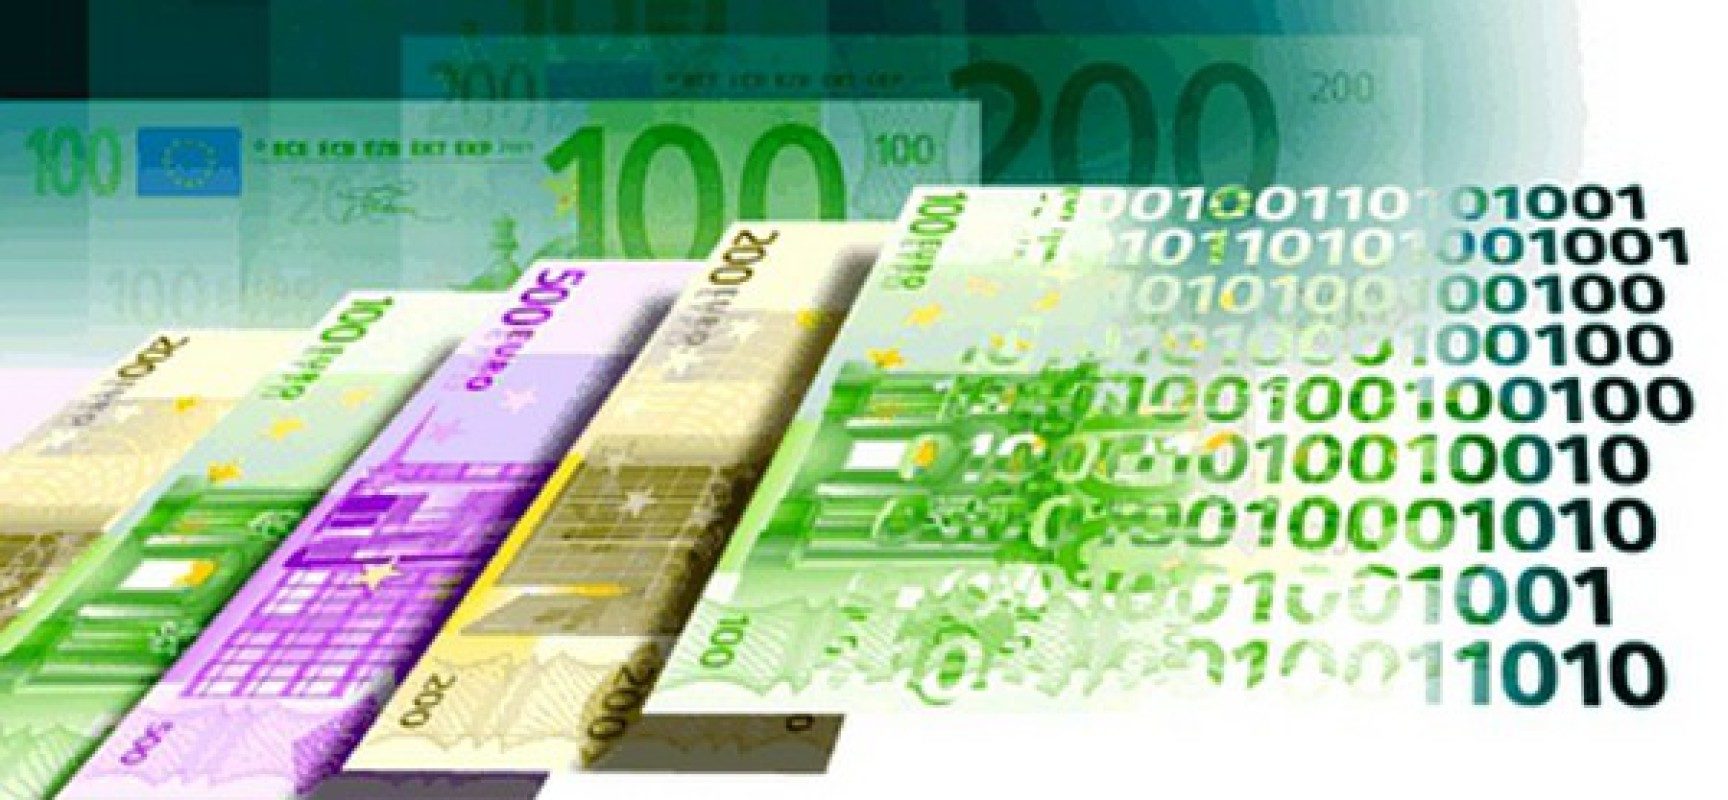 dollars becoming digital cashless society